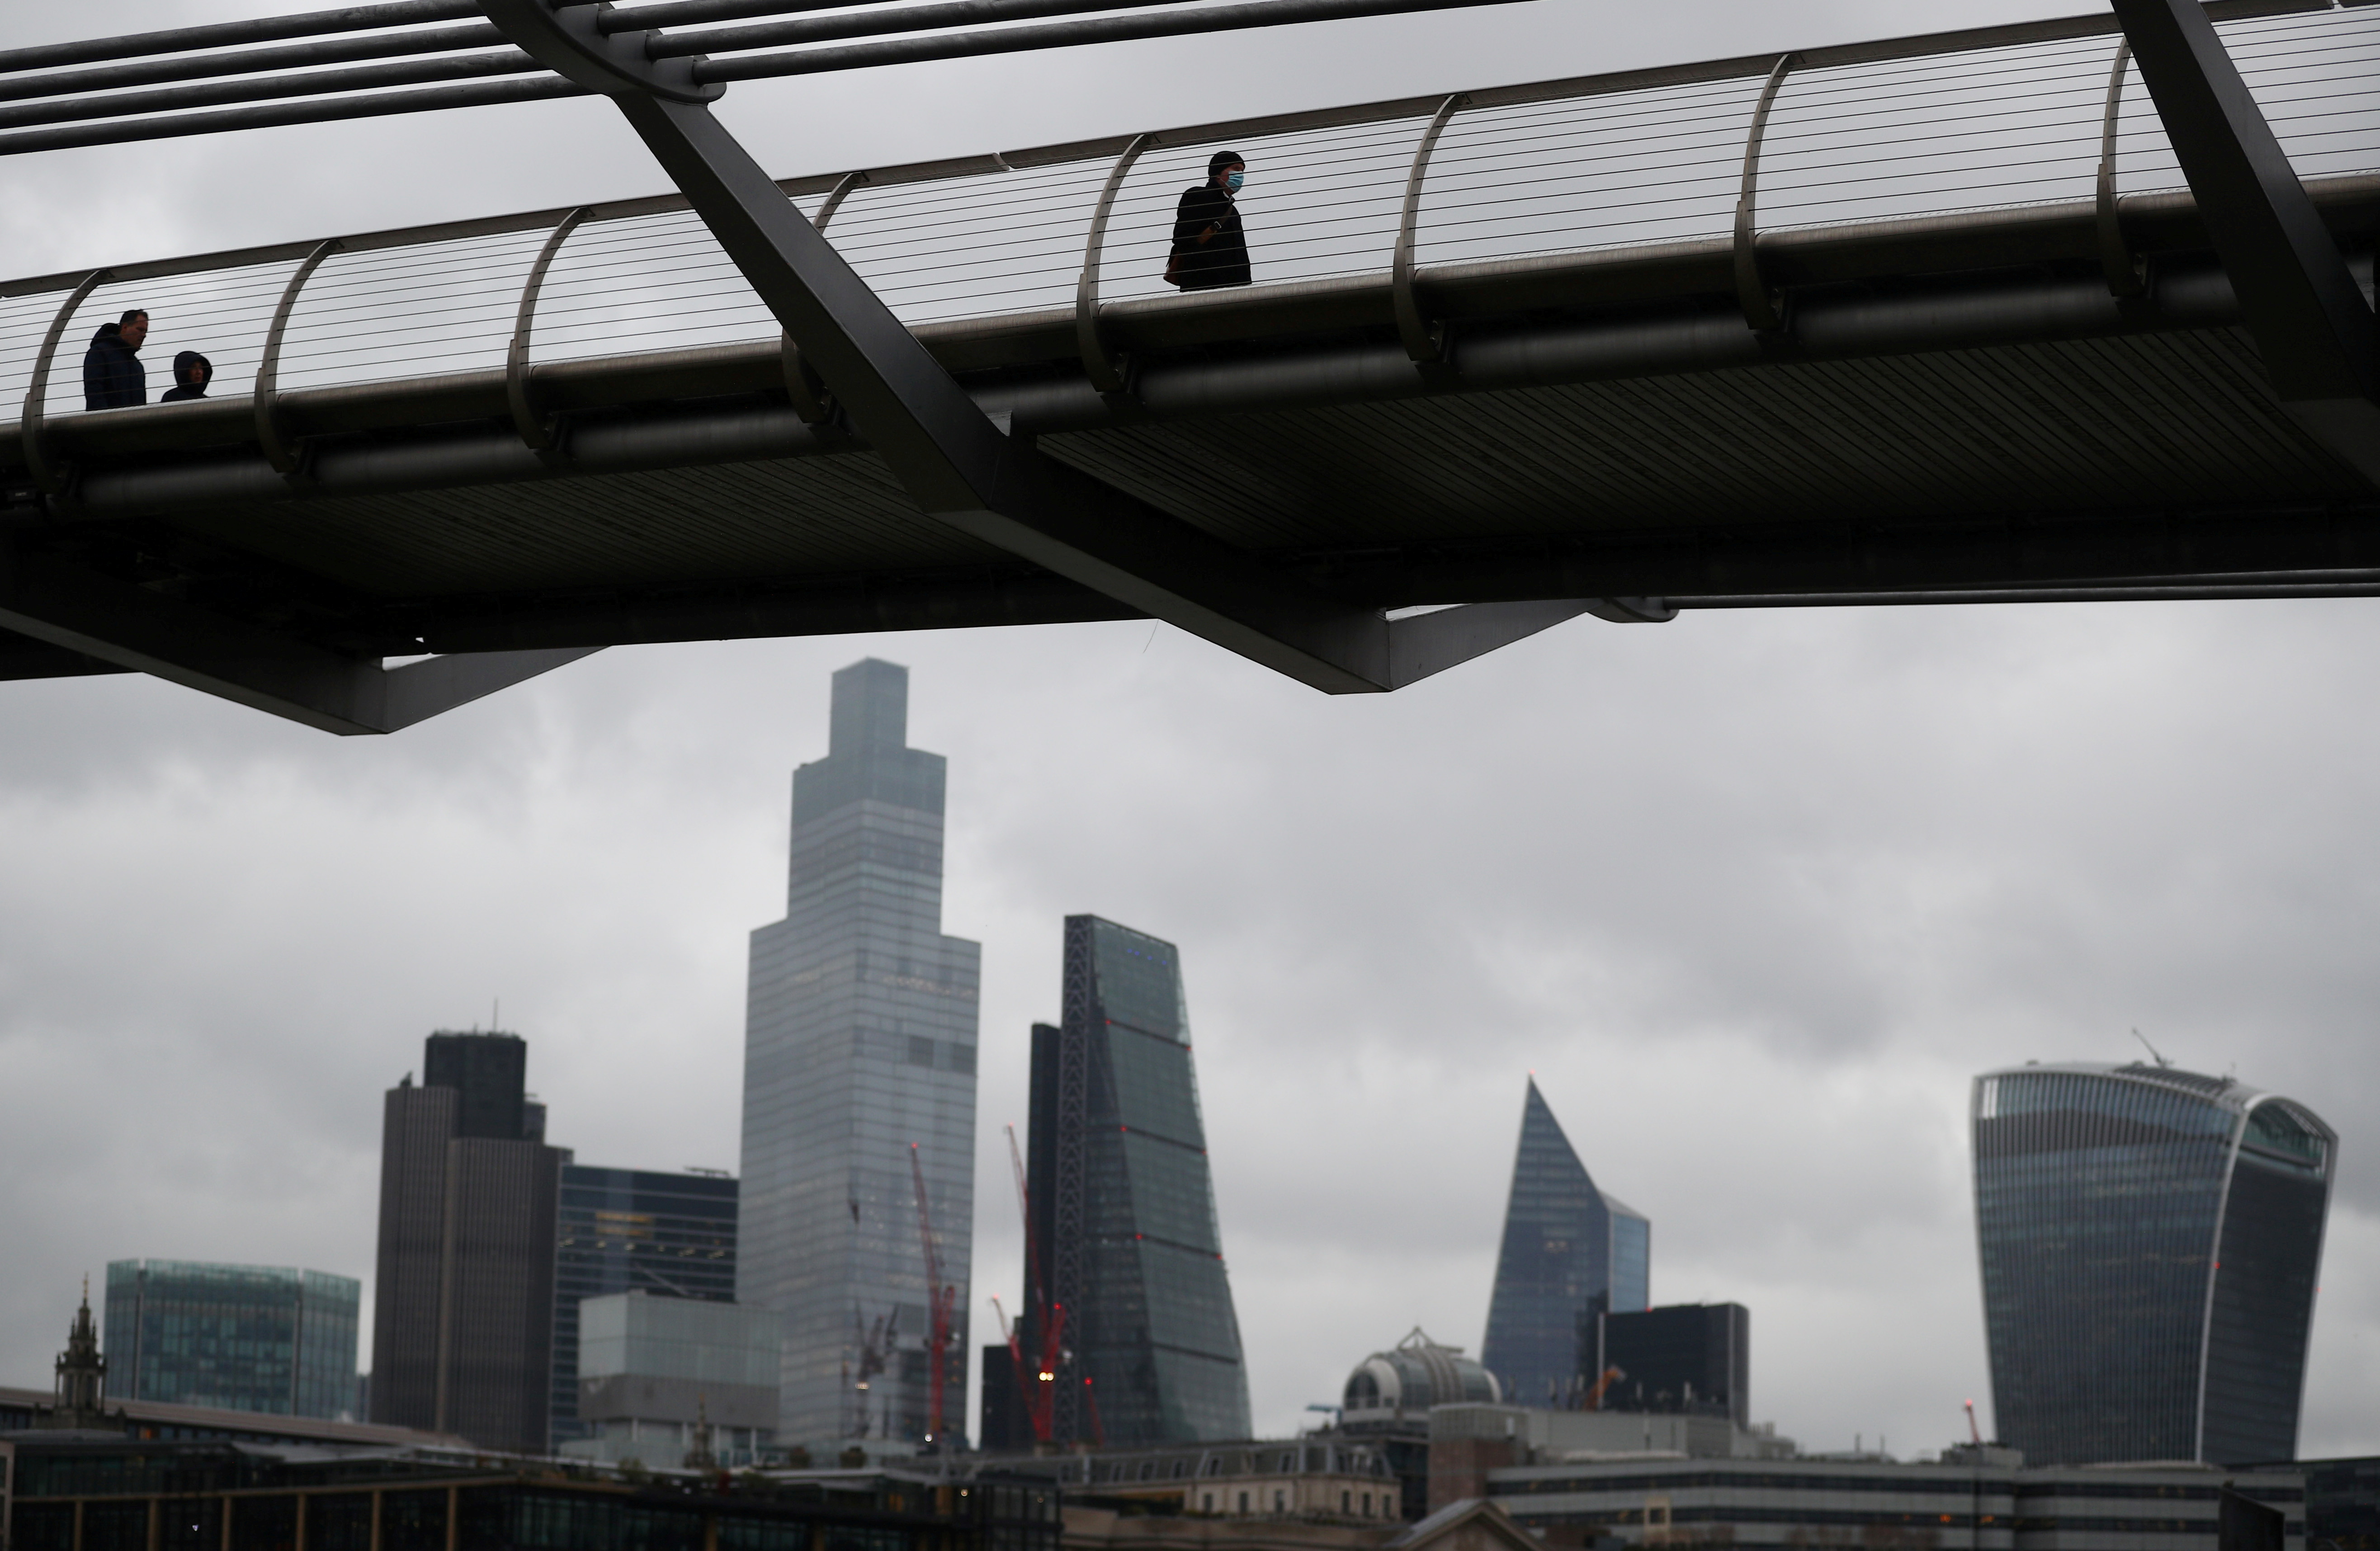 People walk across the Millennium Bridge in London's financial district amid the coronavirus disease (COVID-19) pandemic in London